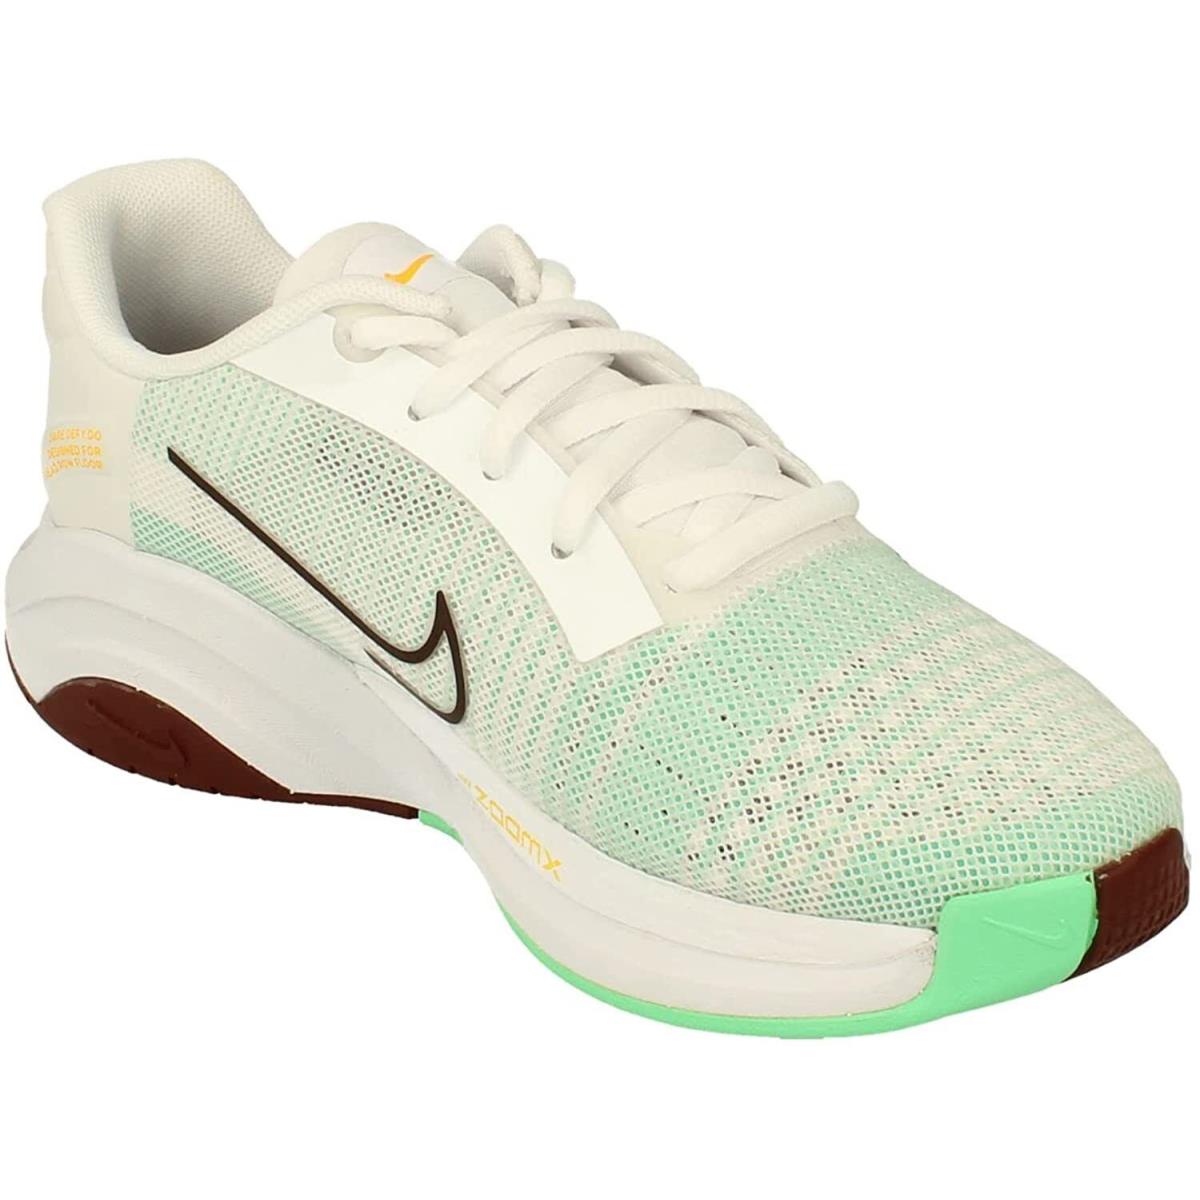 Nike Womens Zoomx Superrep Surge Running Shoe CK9406 135 Size 12 US - White/Bronze Eclipse